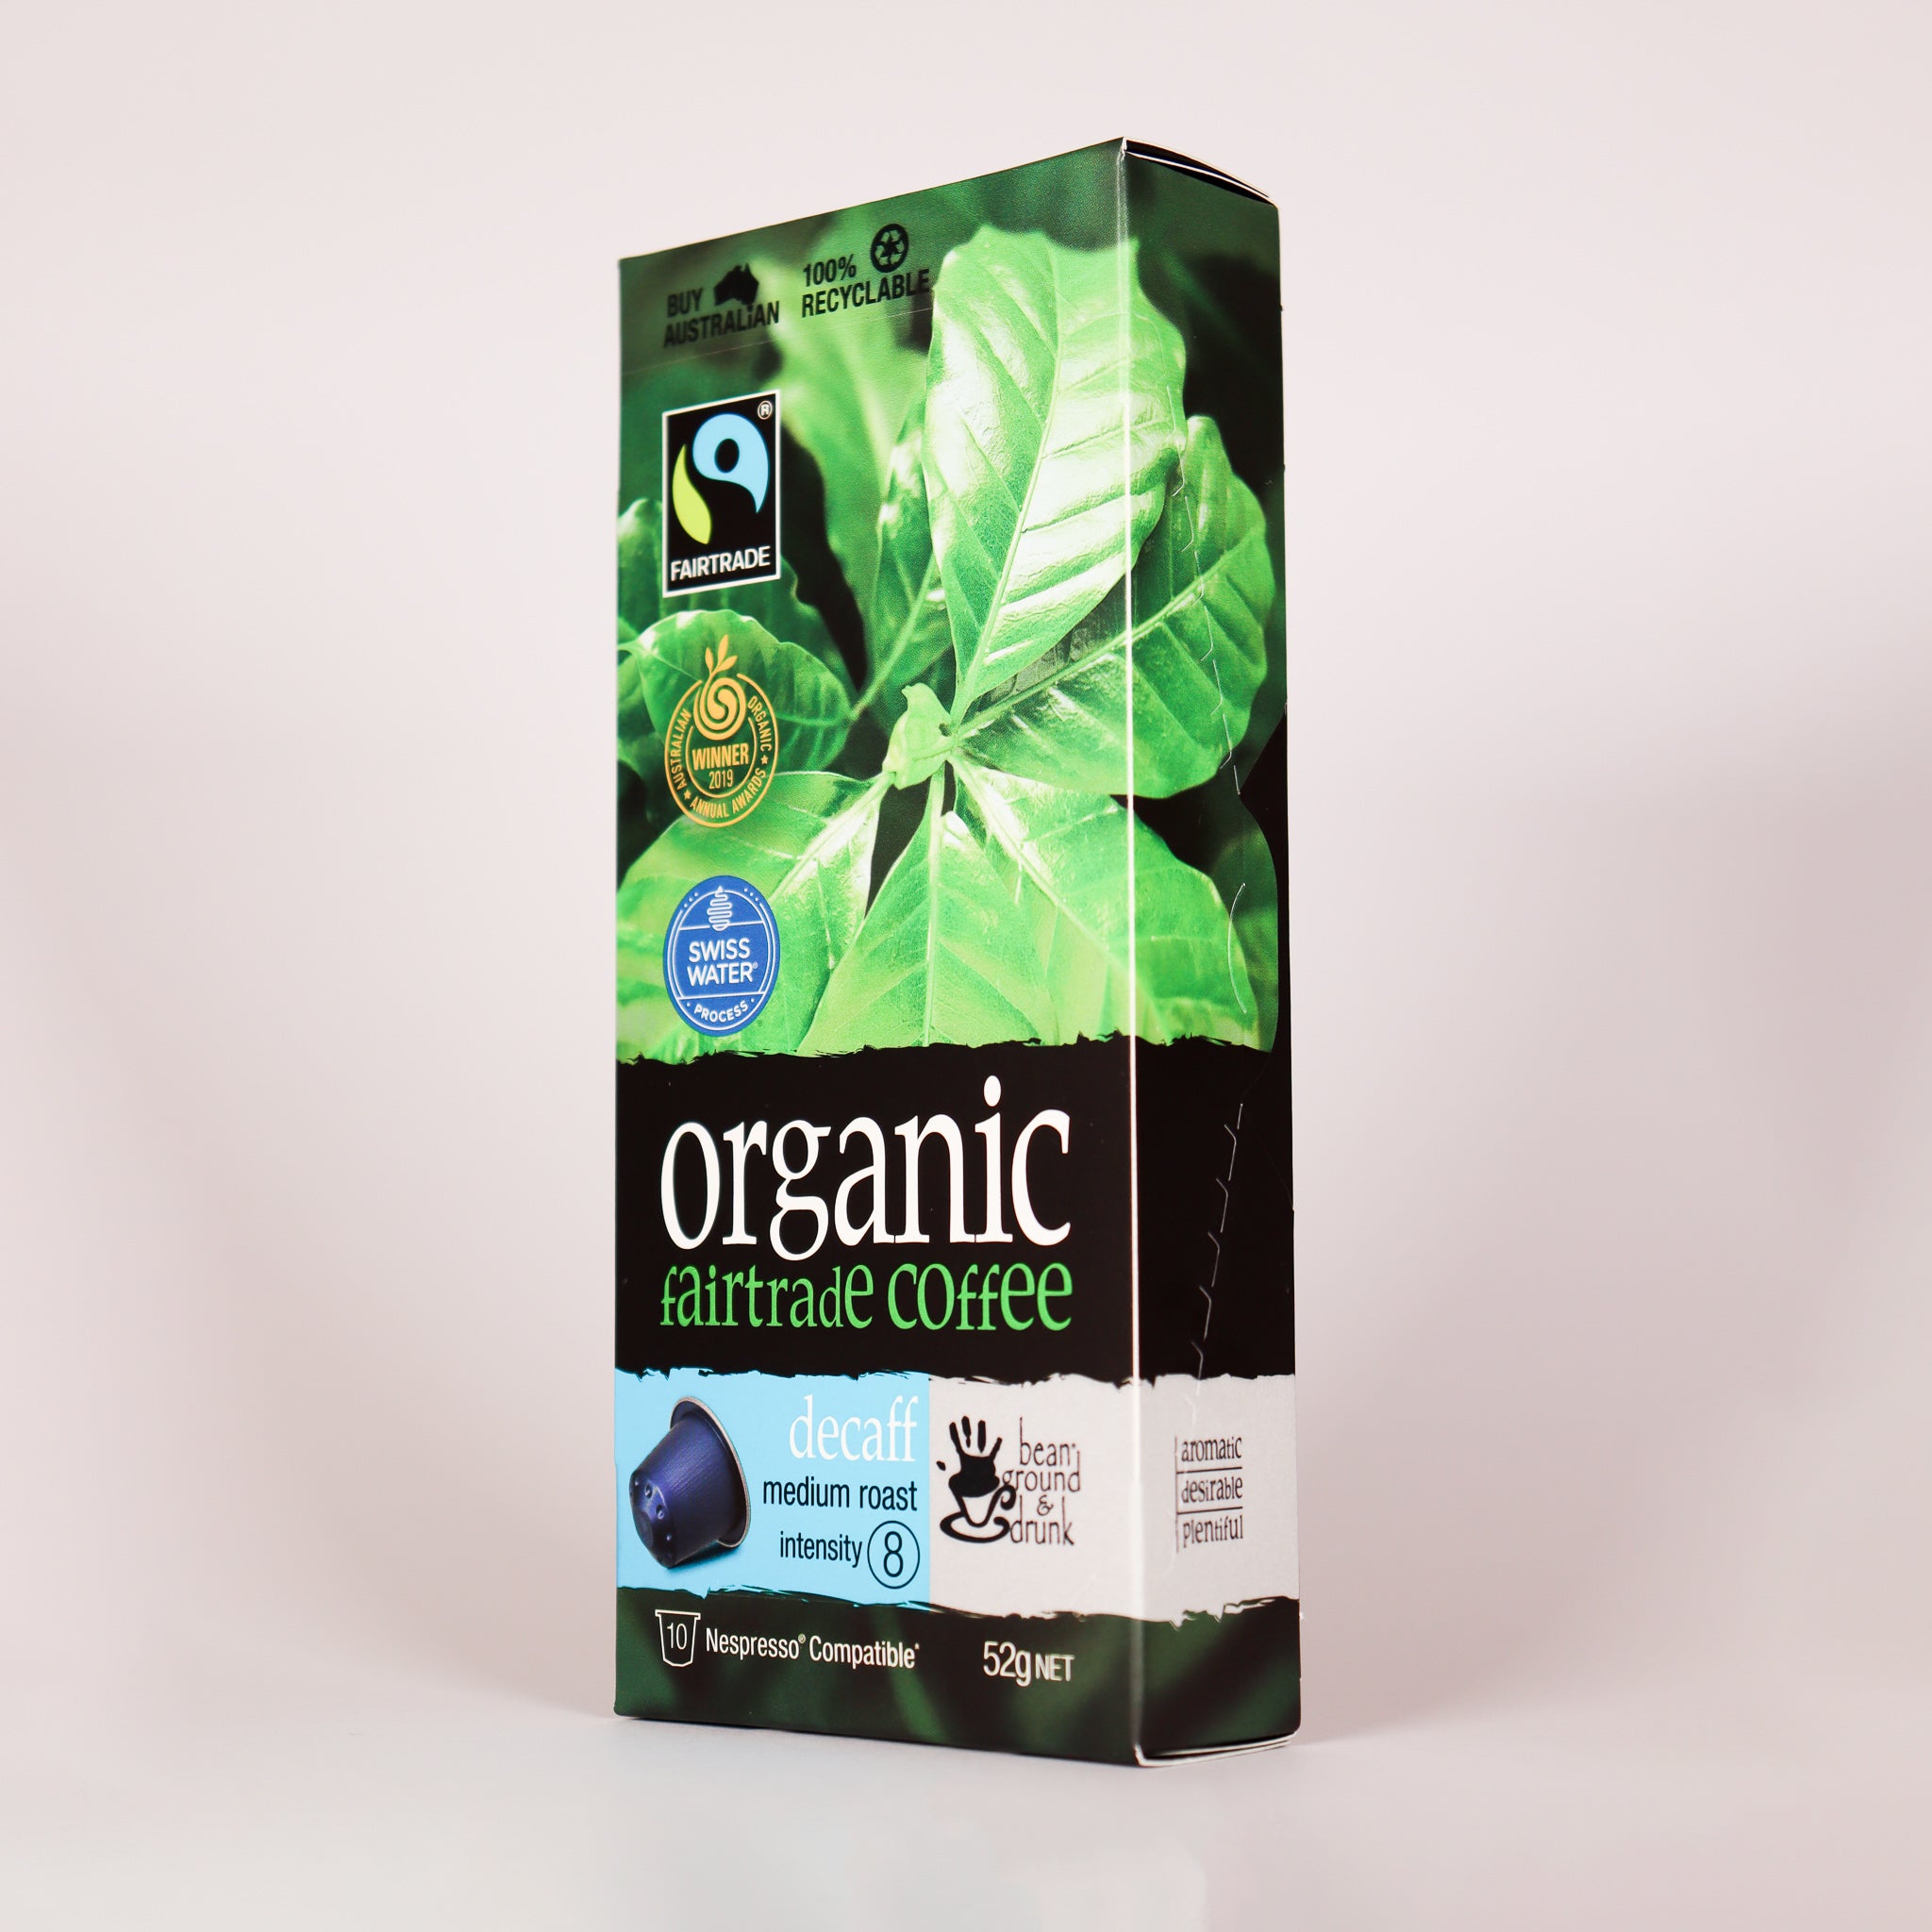 bean ground & drunk Organic Decaff Fairtrade Coffee  aluminium Capsules 10pk